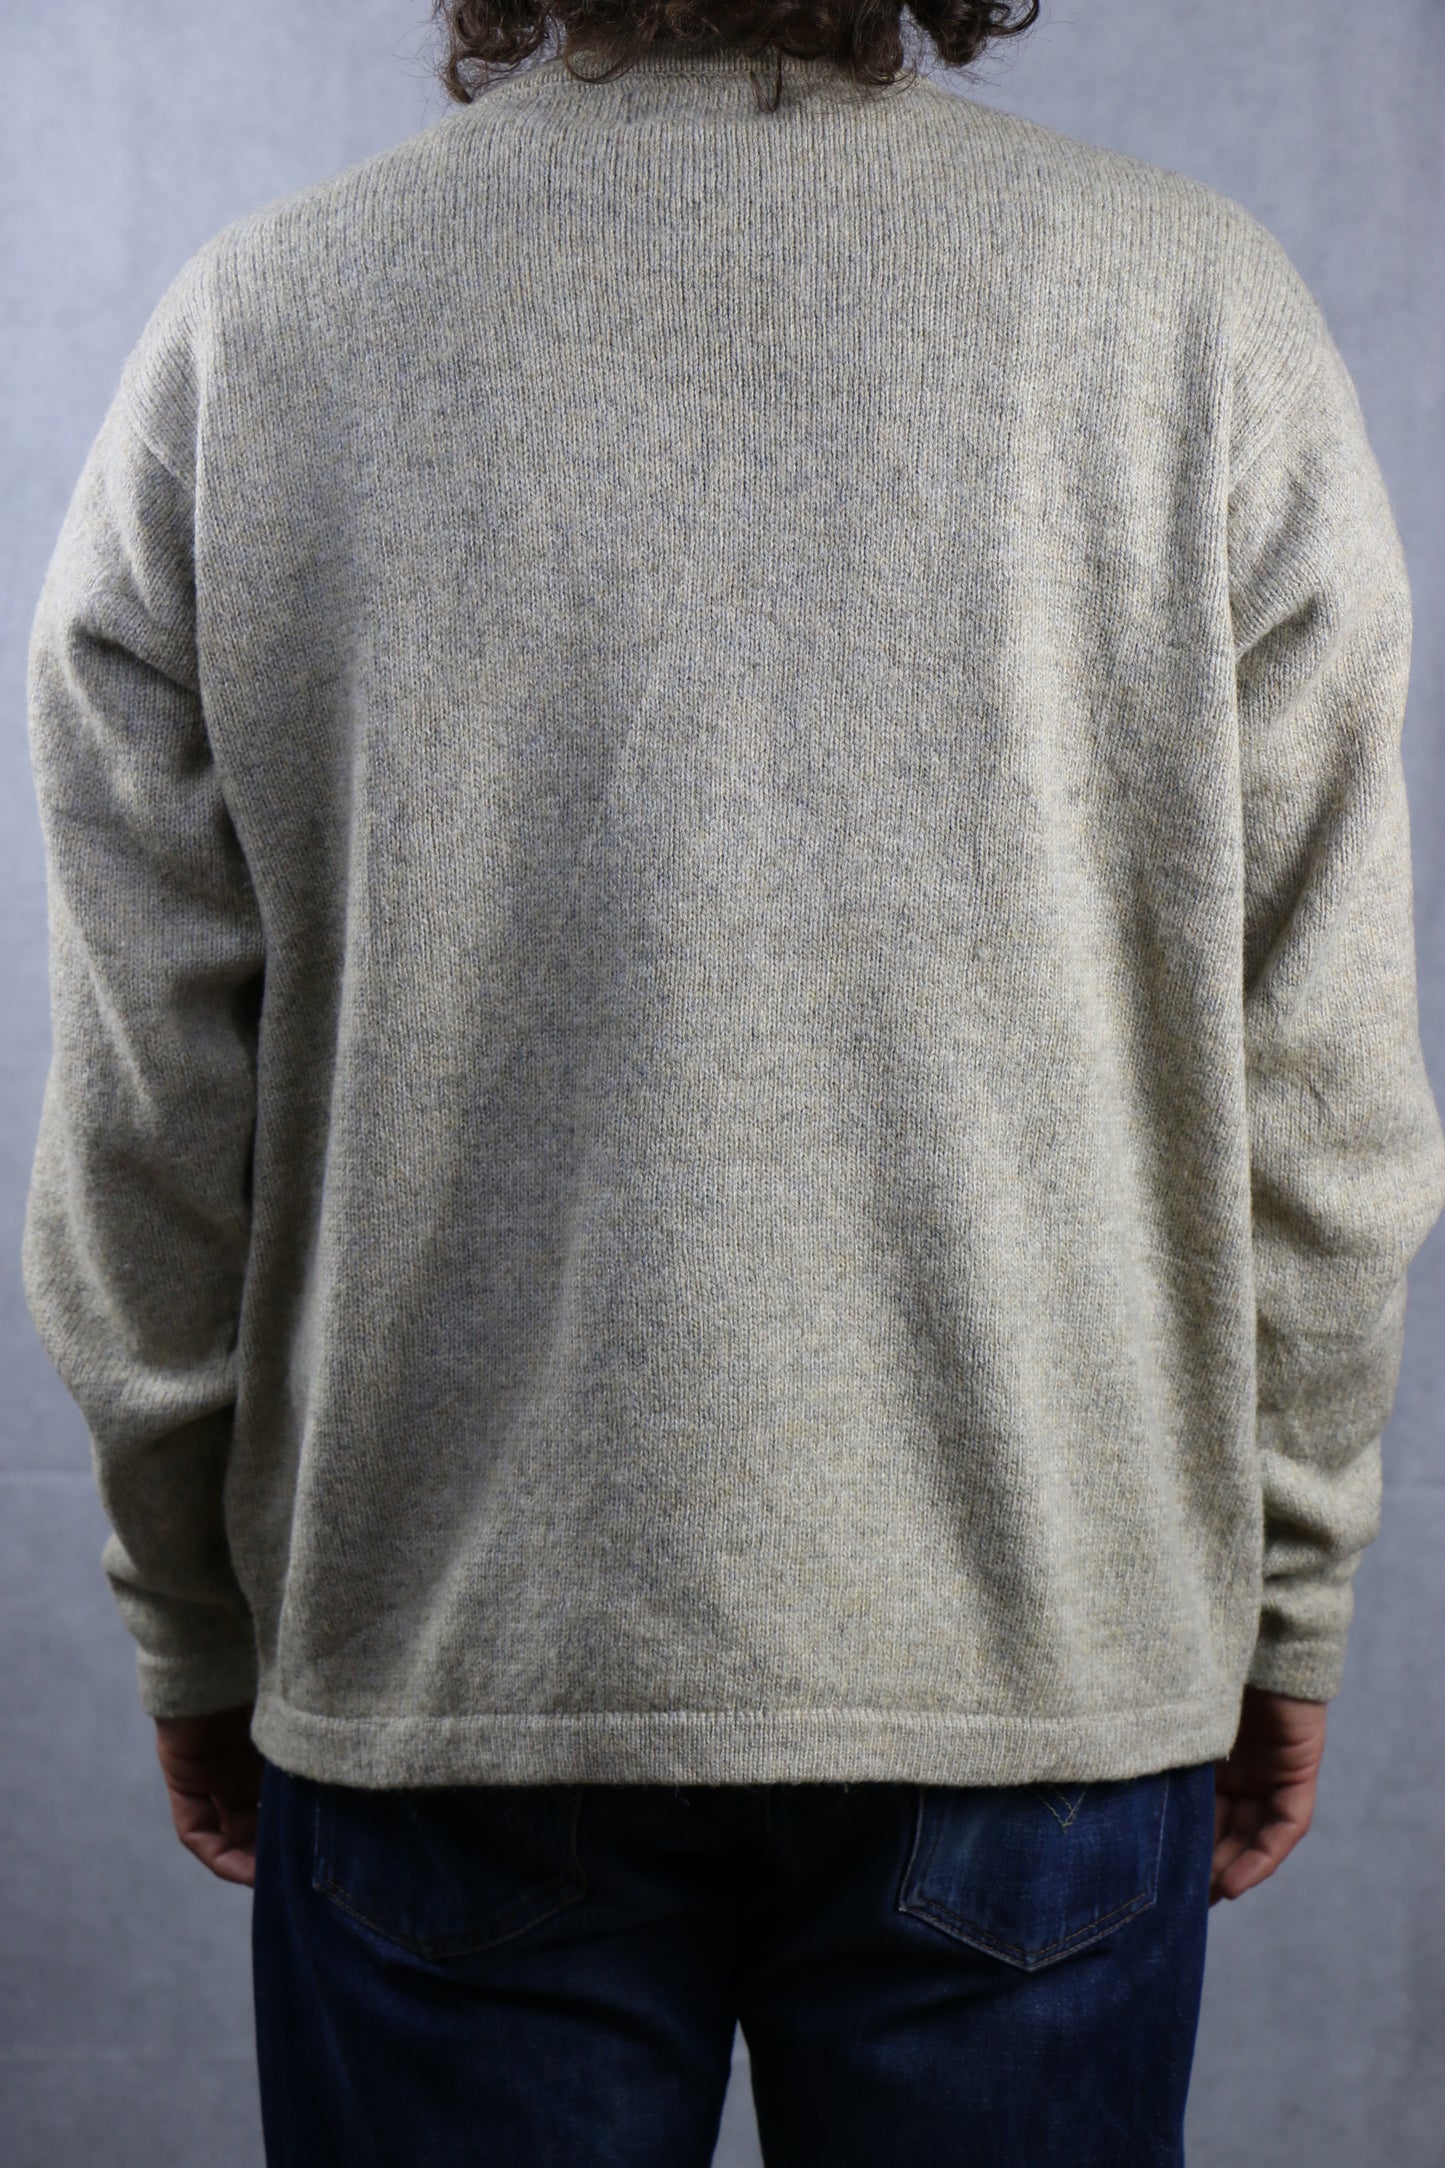 Woolrich Crewneck Sweater - vintage clothing clochard92.com